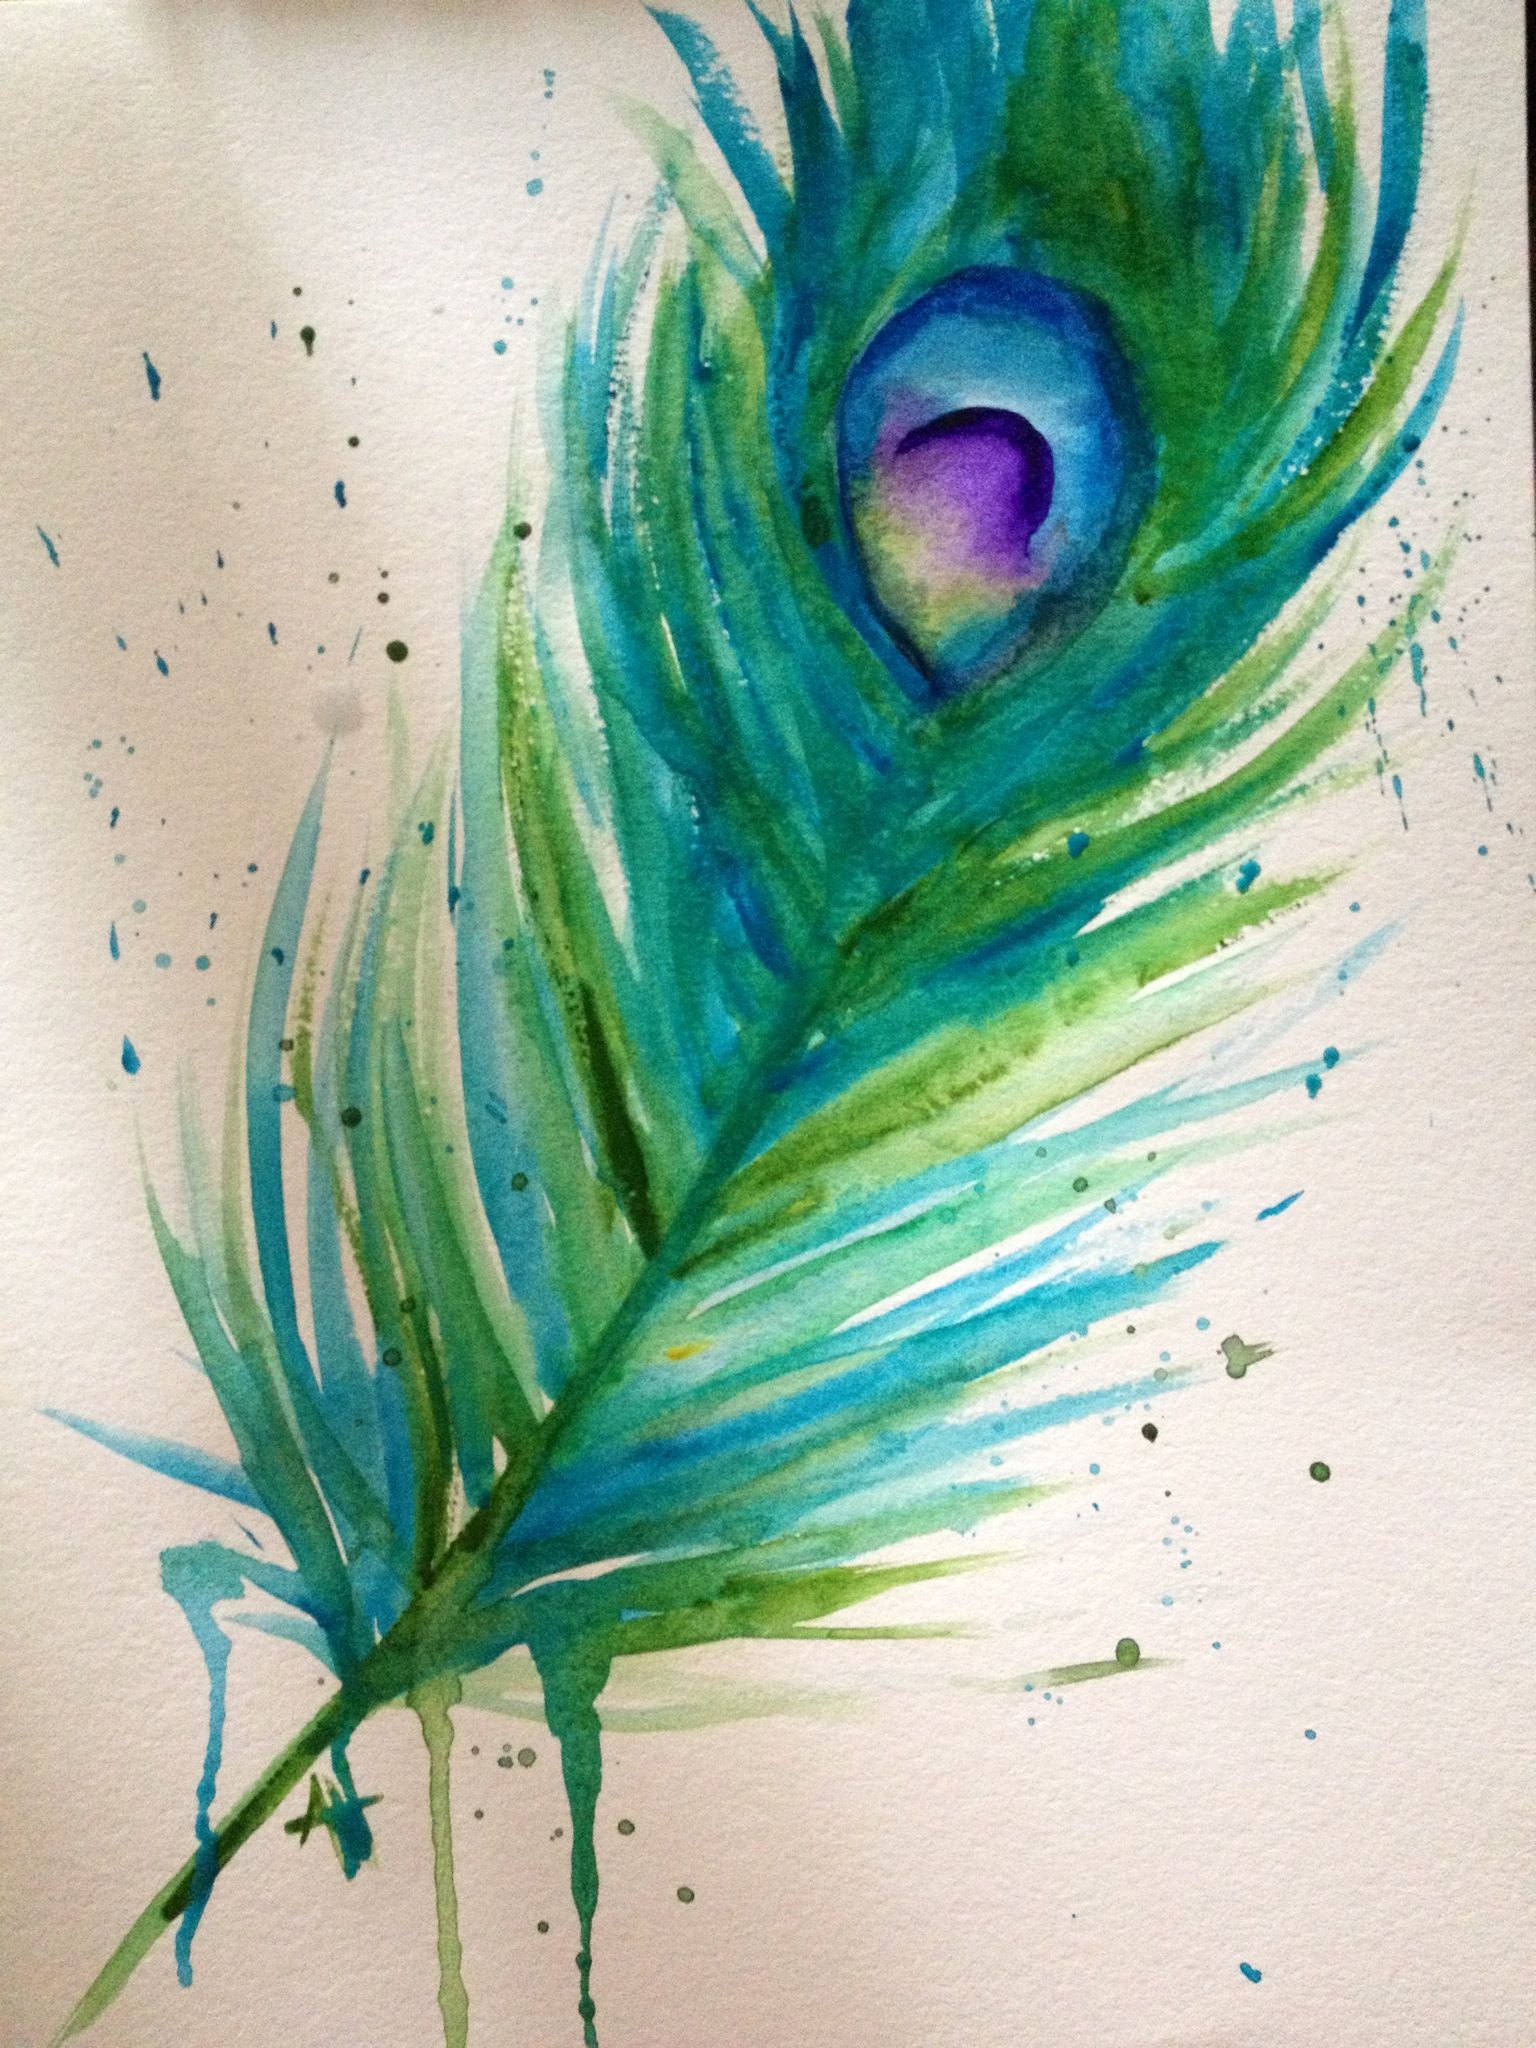 Watercolor peacock feather art | Art | Pinterest | Watercolor ...